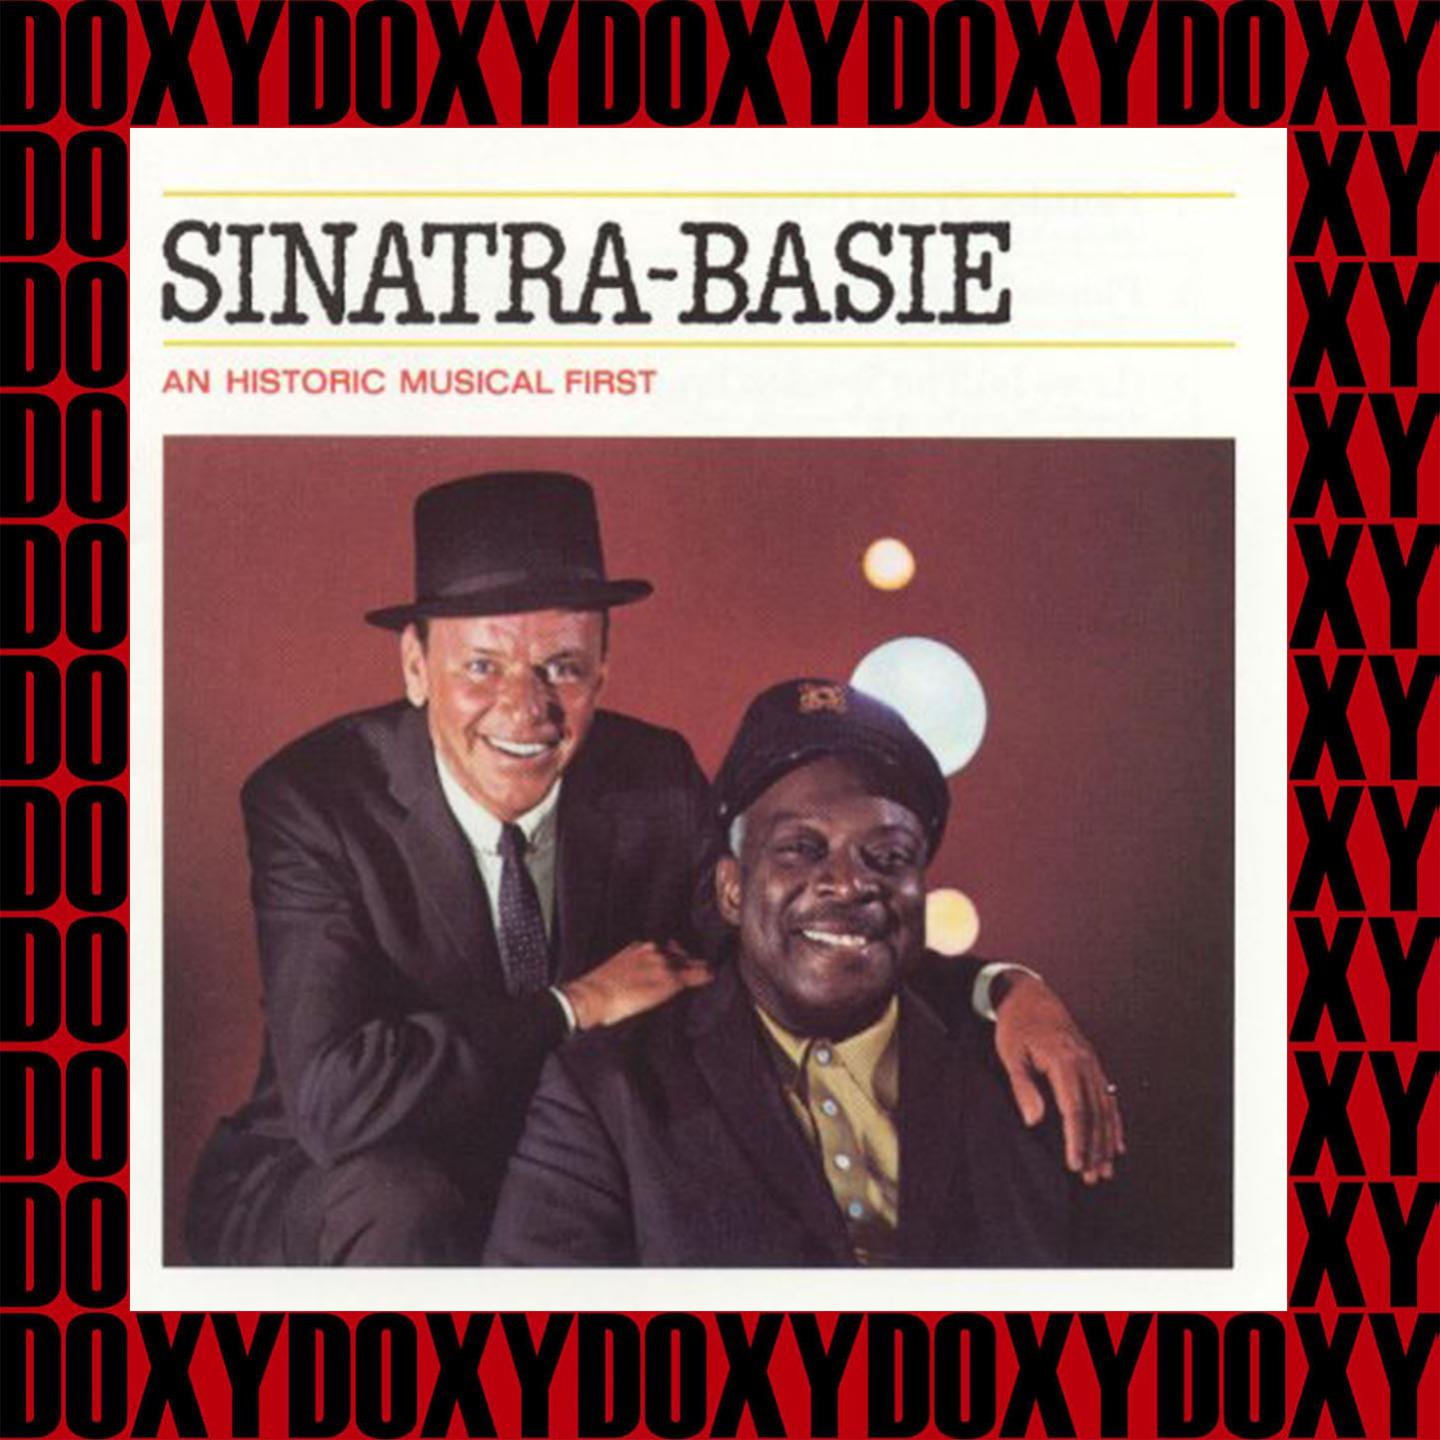 Sinatra & Basie (Remastered Version) (Doxy Collection)